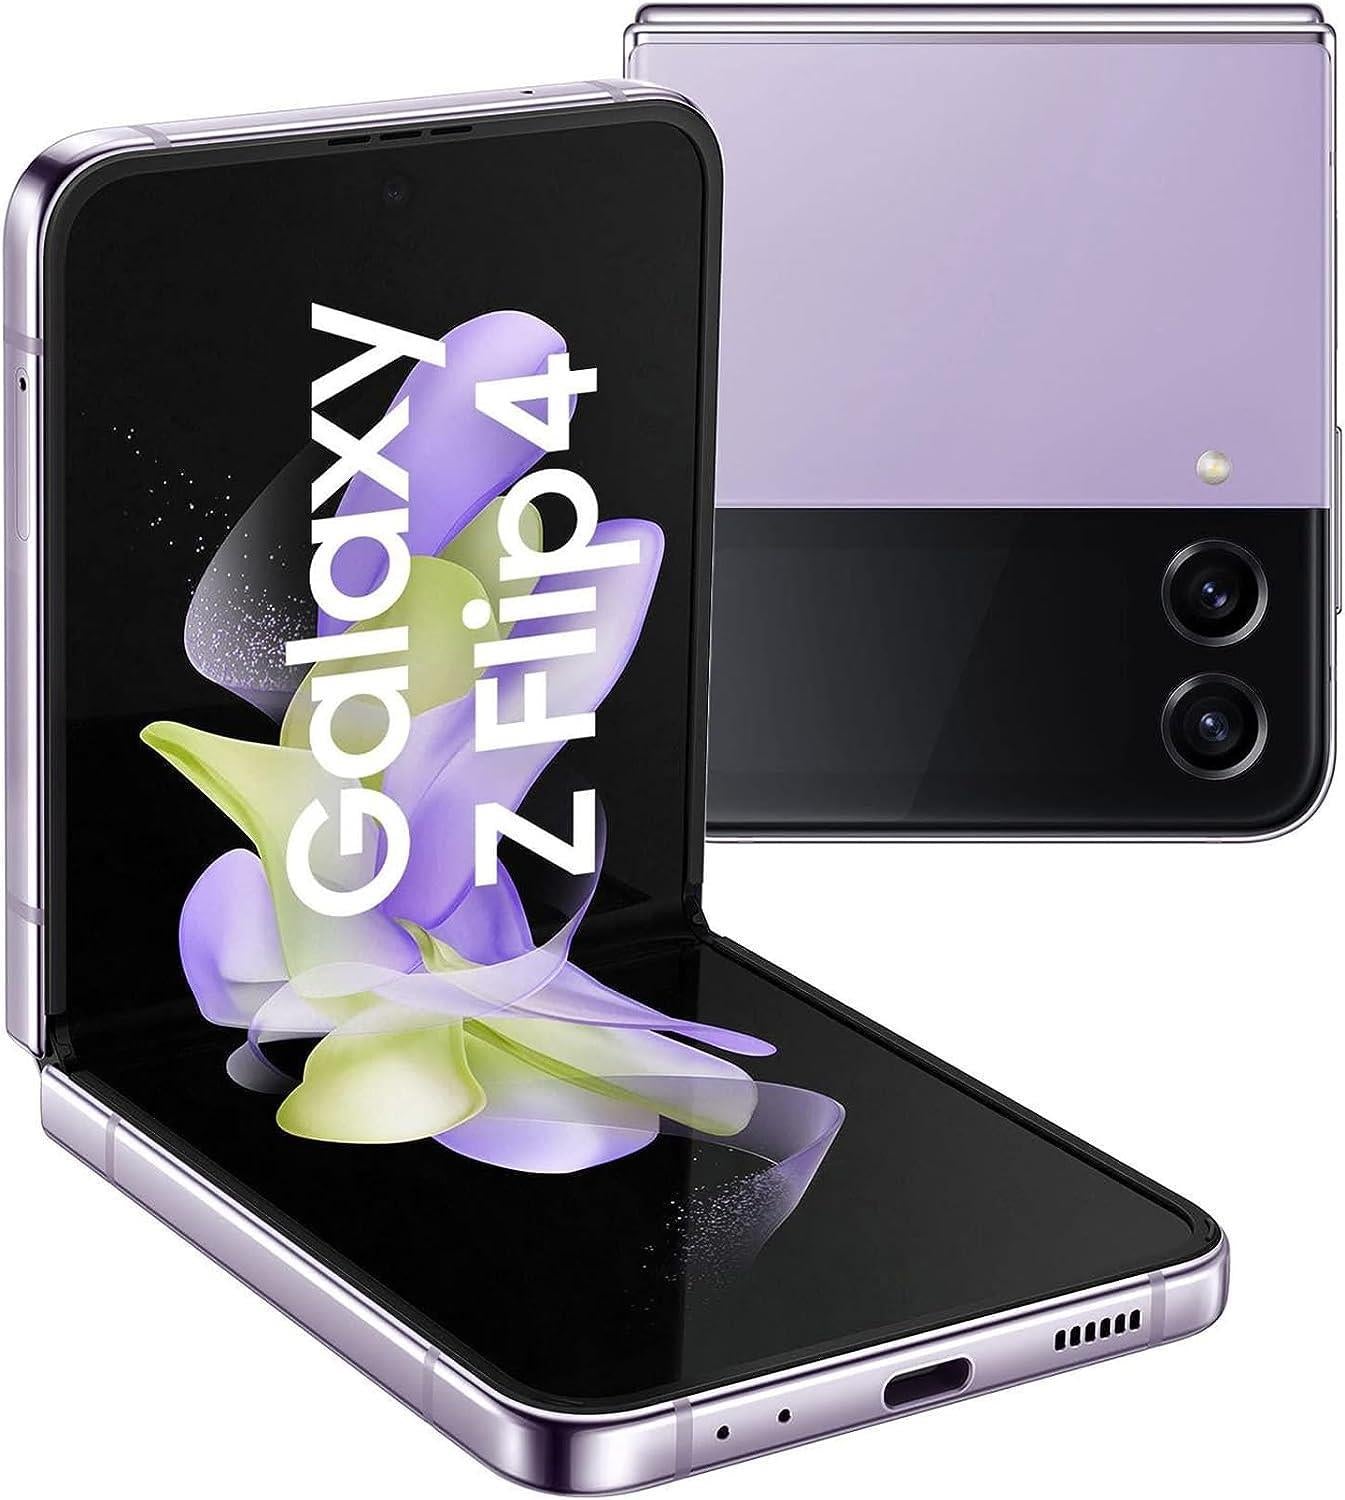 Refurbished Samsung Galaxy Z Flip 4G